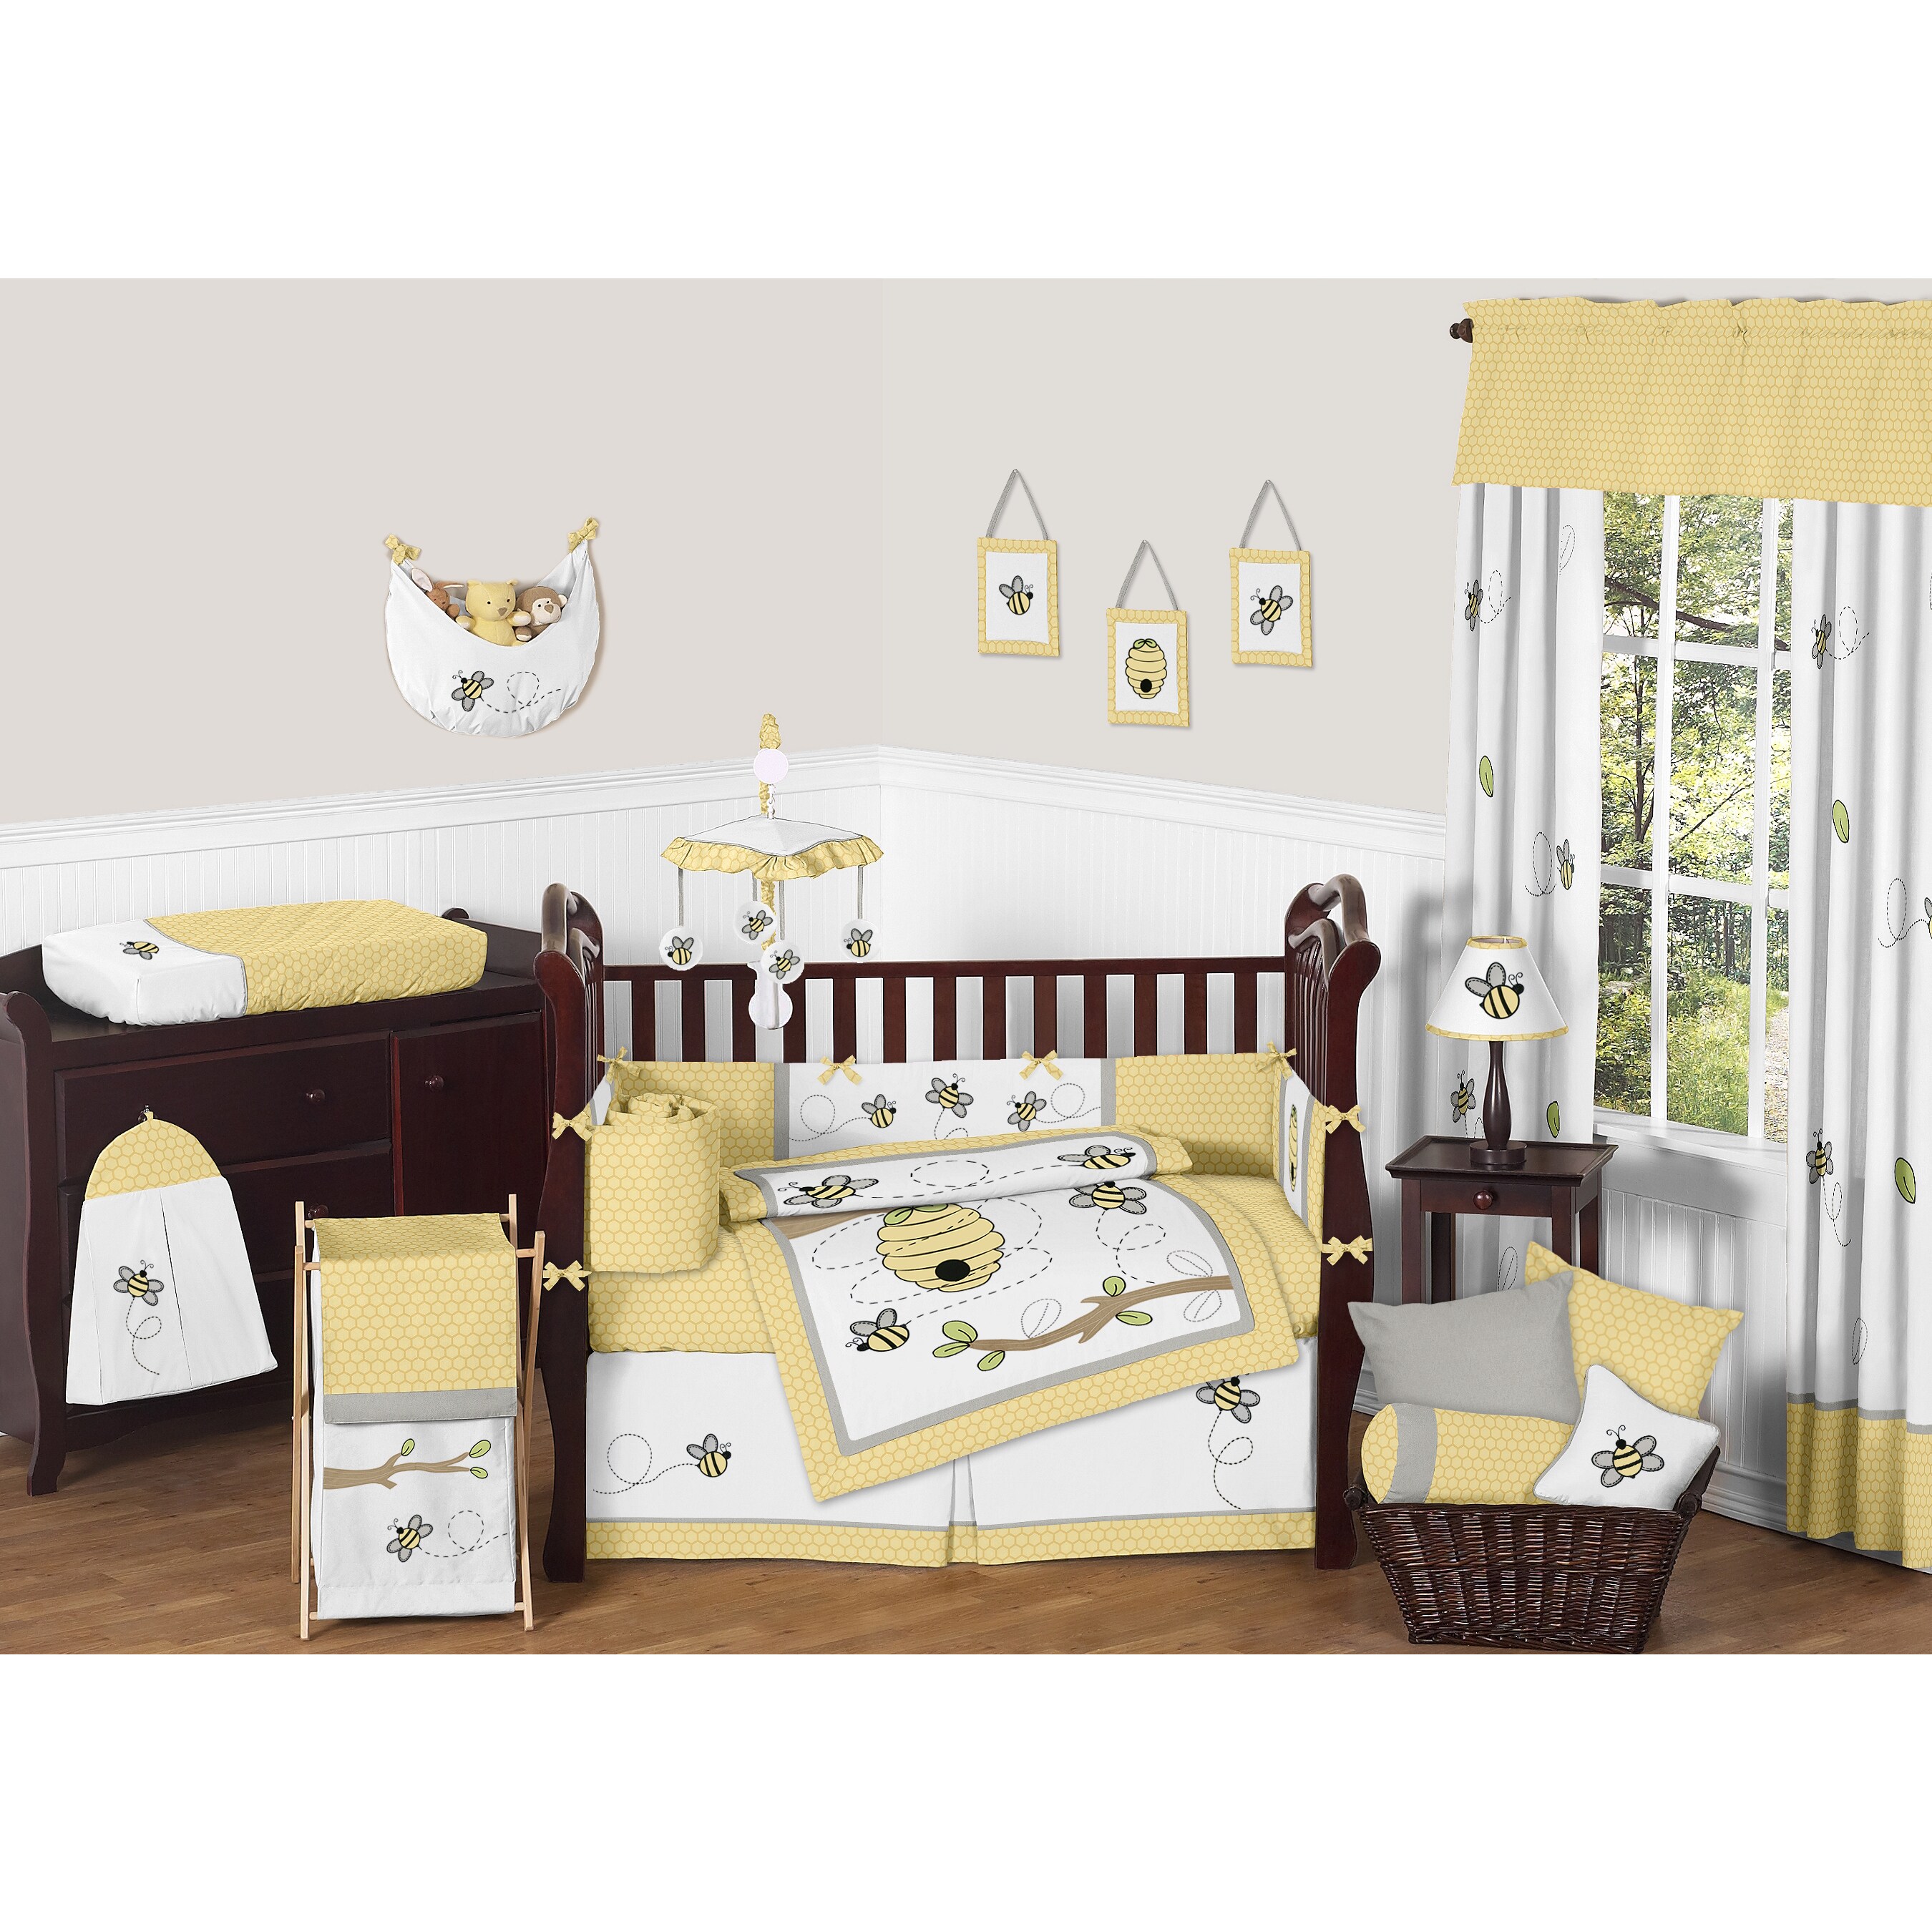 Dino Baby Quilt, Dinosaur Baby Blanket, Nursery Crib Bedding, Newborn